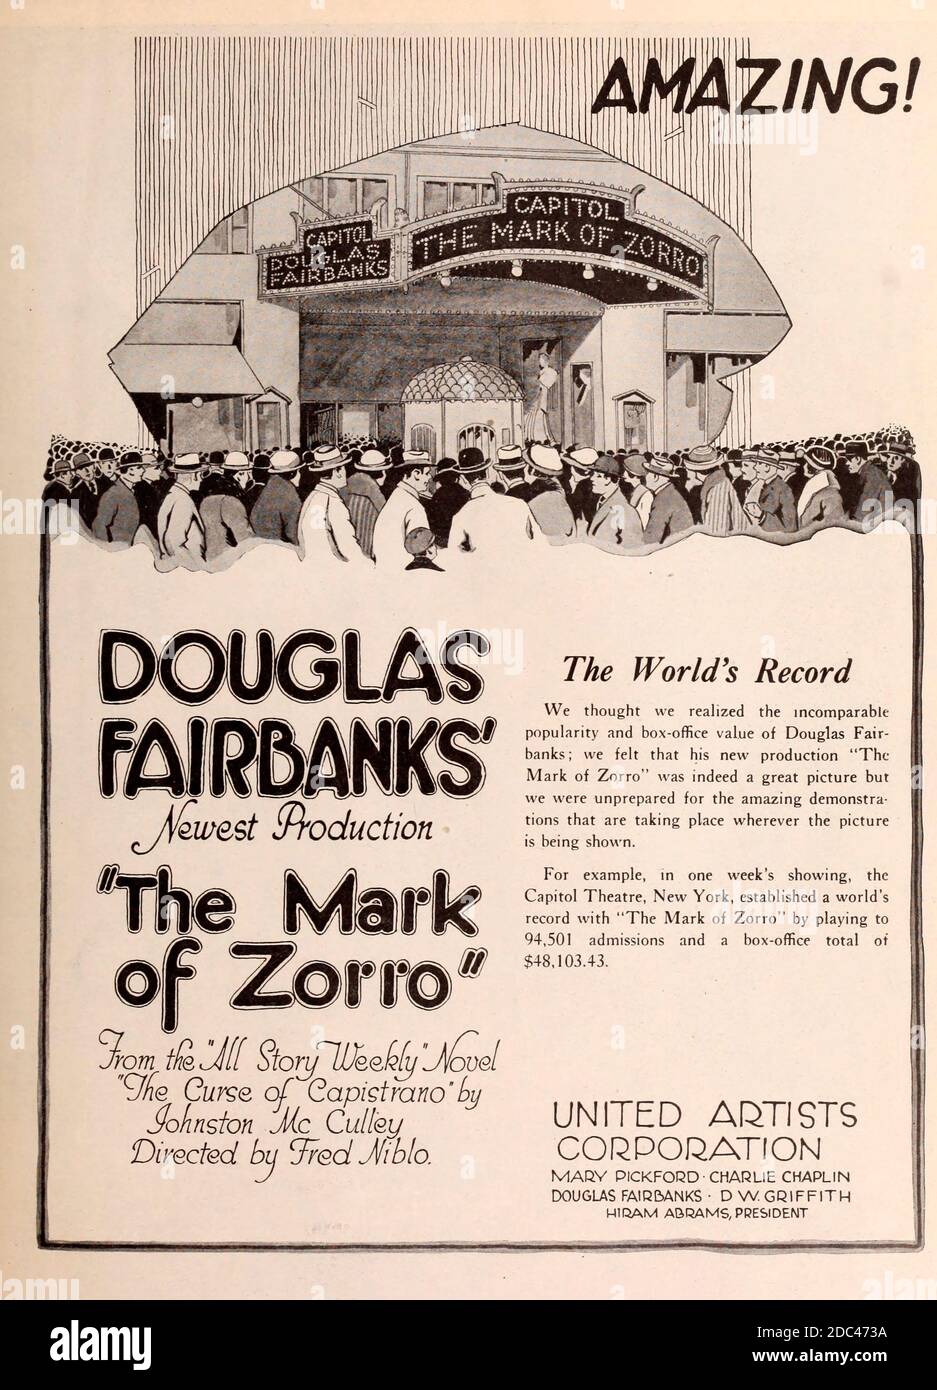 Advertisement for Douglas Fairbanks - The Mark of Zorro - Motion Picture, 1920 Stock Photo